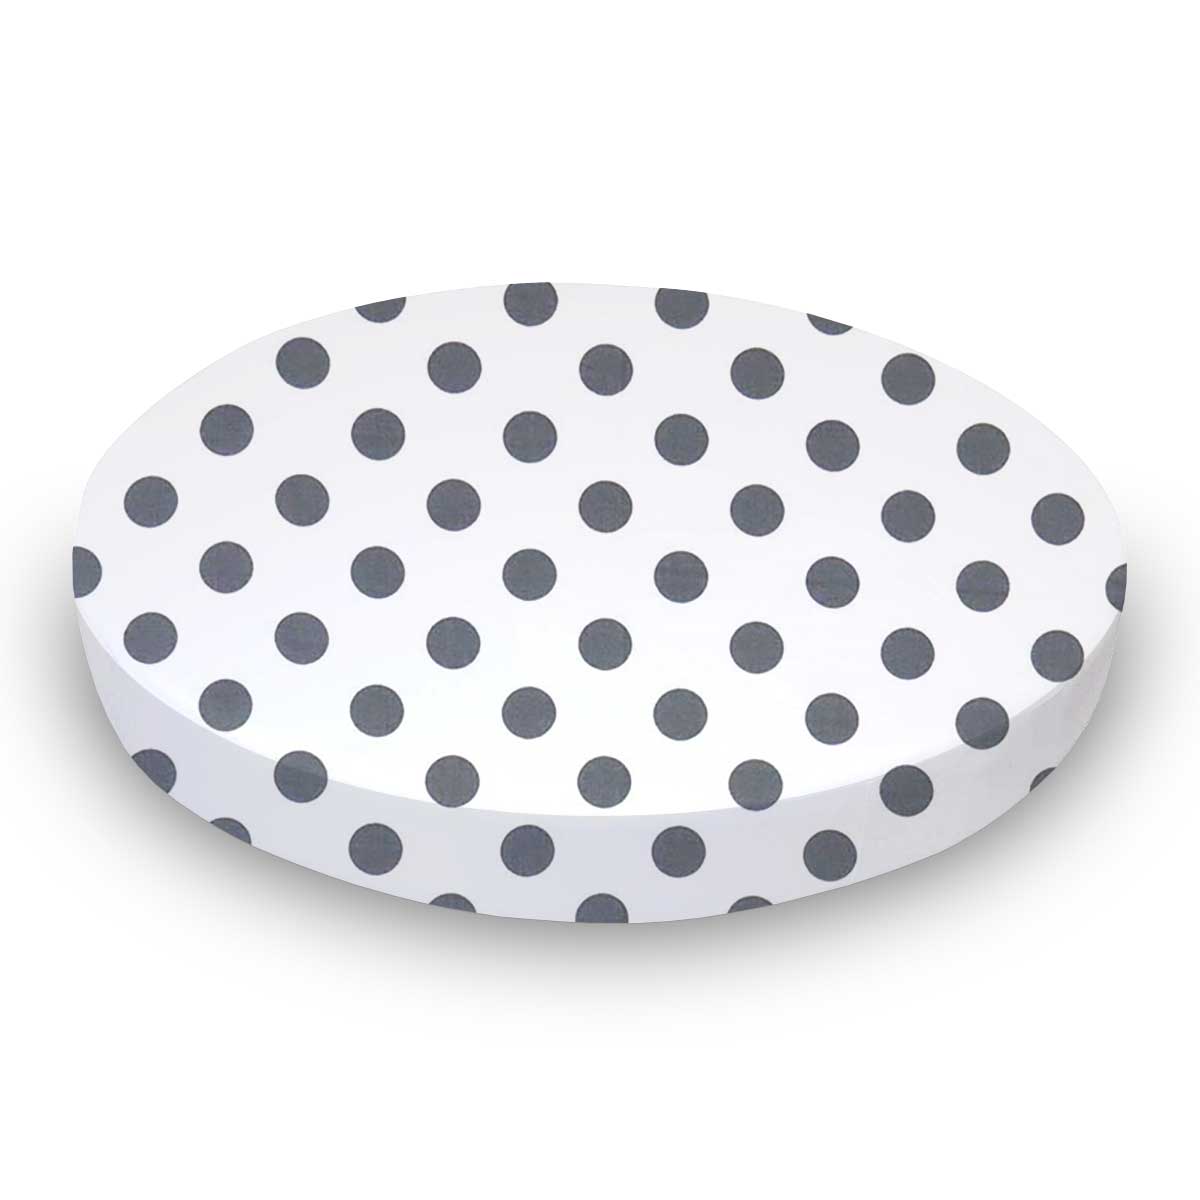 Oval Crib (Stokke Sleepi) - Grey Polka Dots - Fitted  Oval